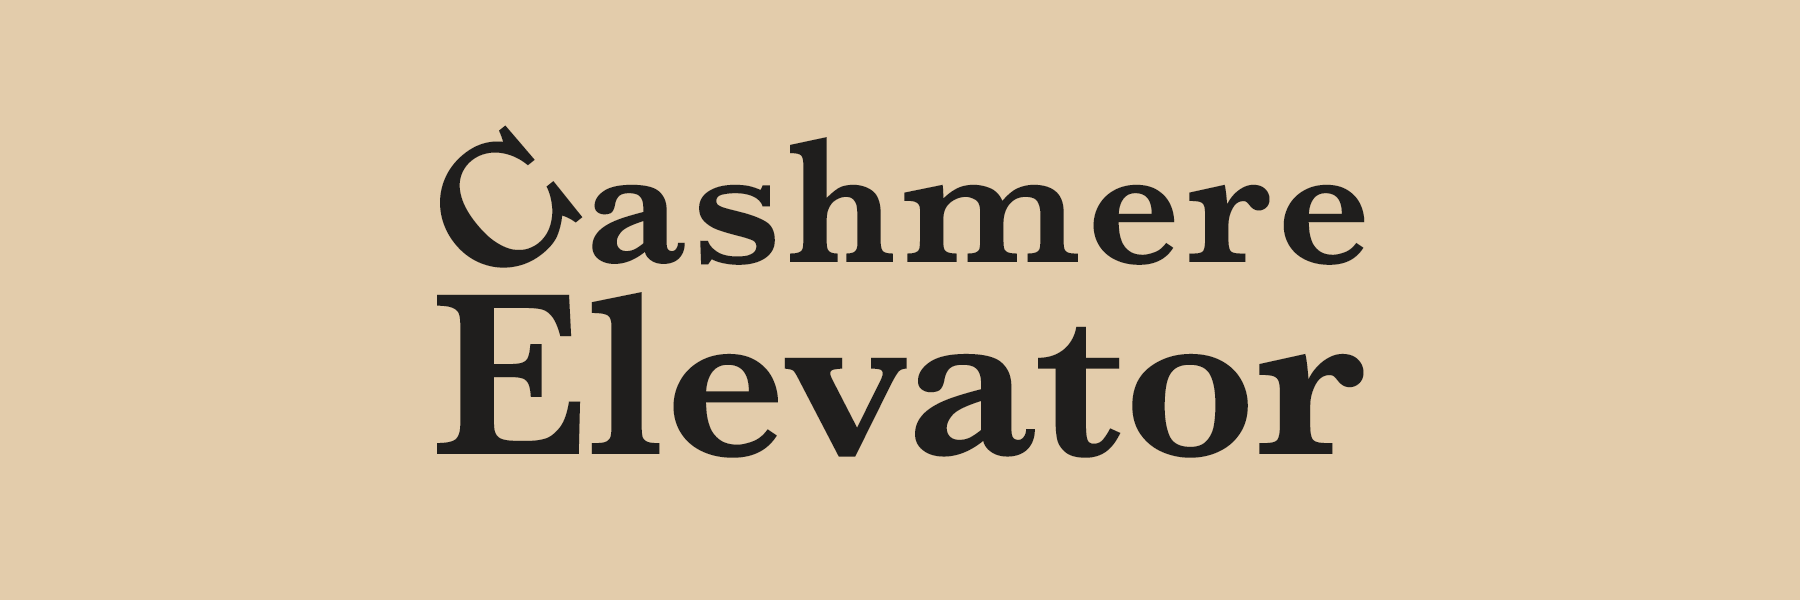 Cashmere_Elevator banner